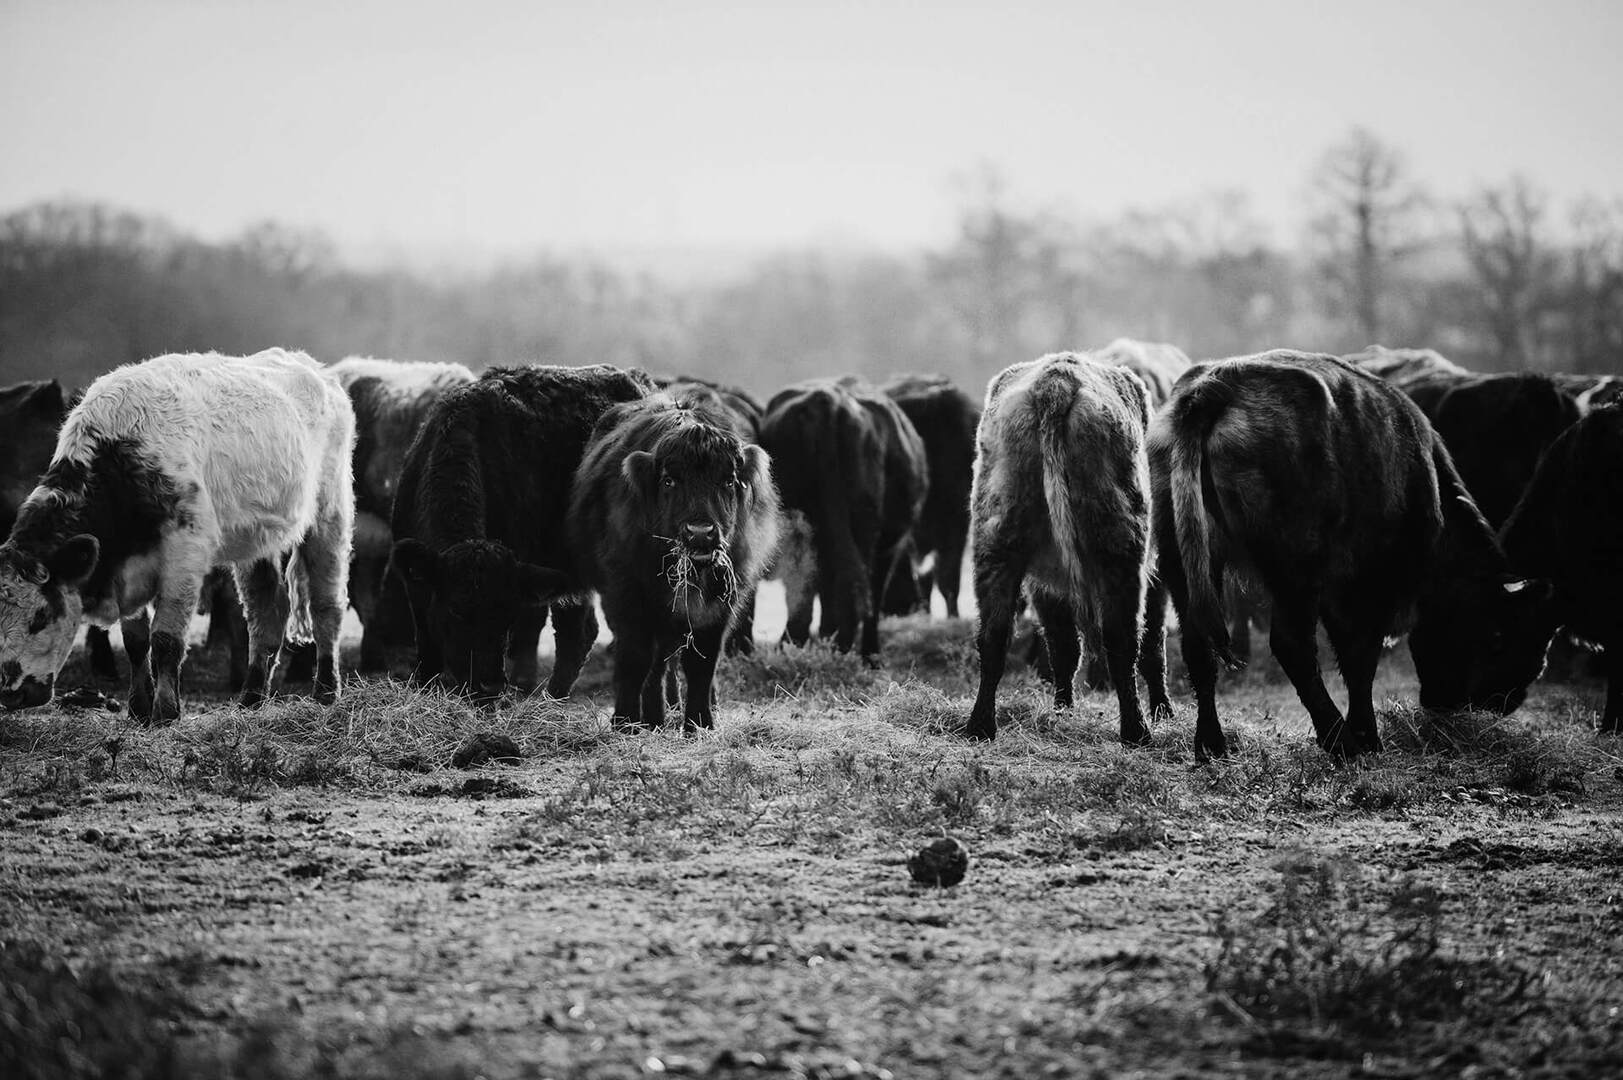 Cattle gather around in a field.